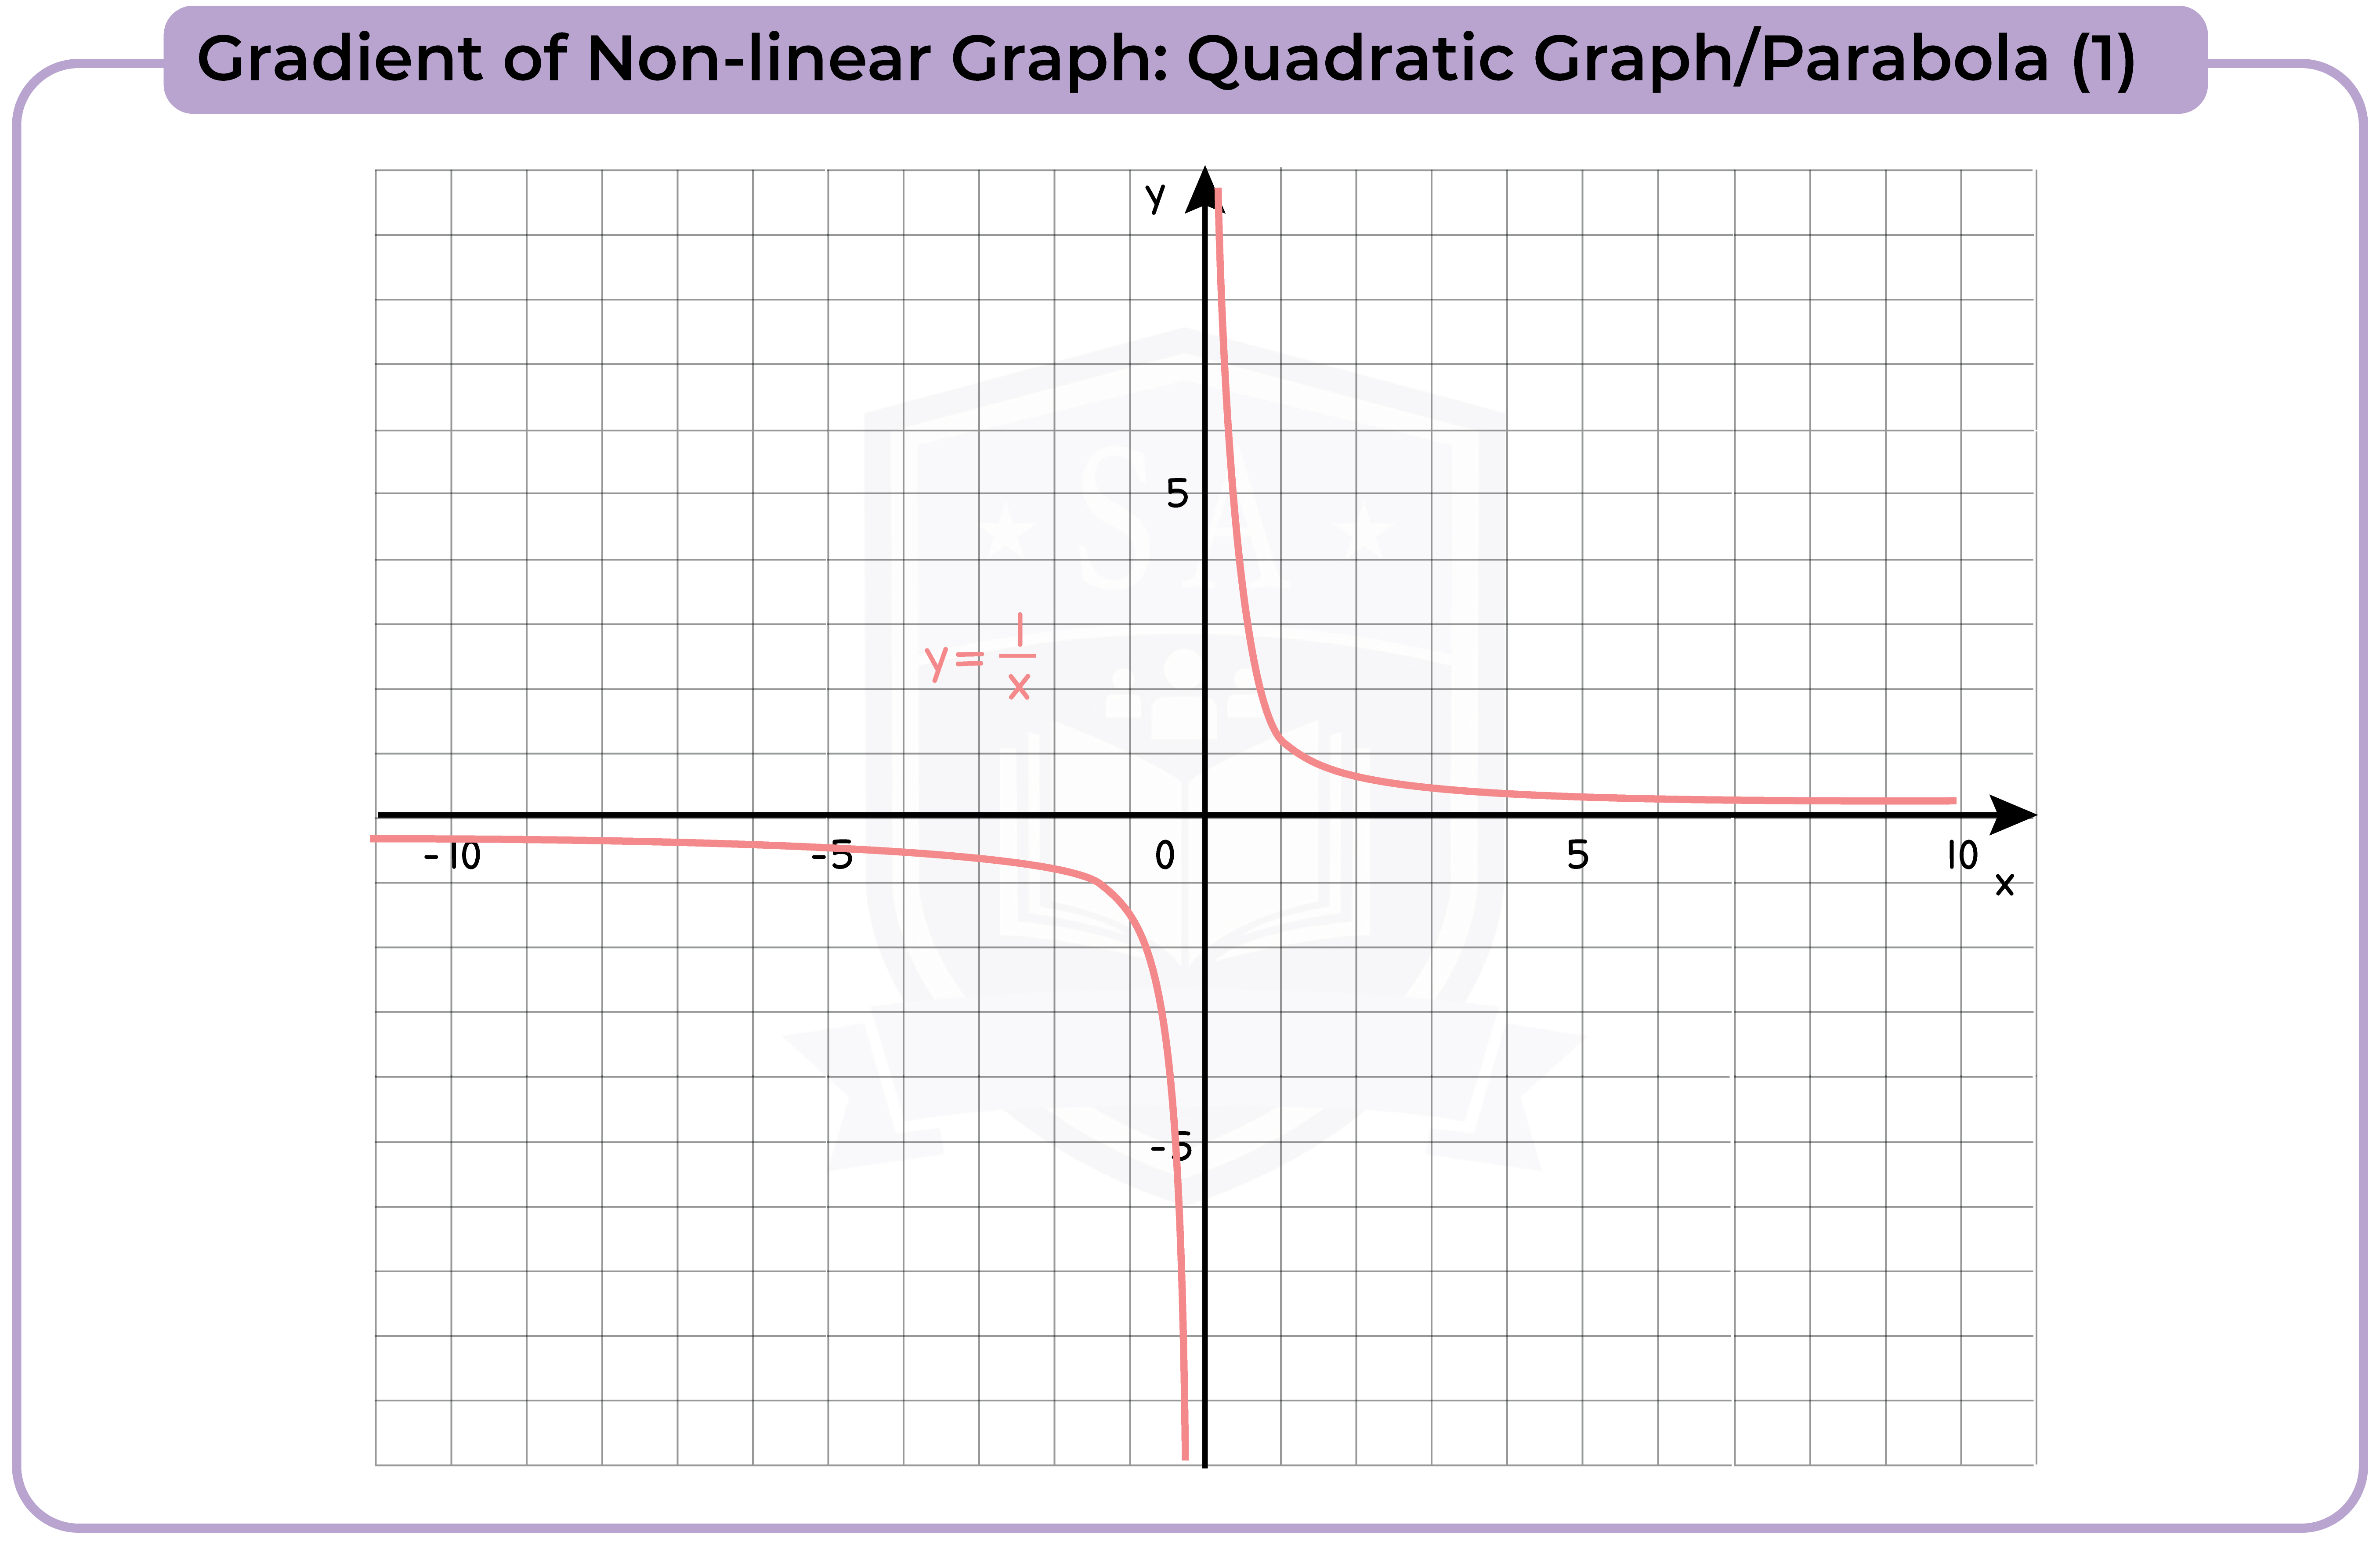 edexcel_igcse_mathematics a_topic 23_graphs_026_Gradient of Non-linear Graph: Quadratic Graph/Parabola (1)